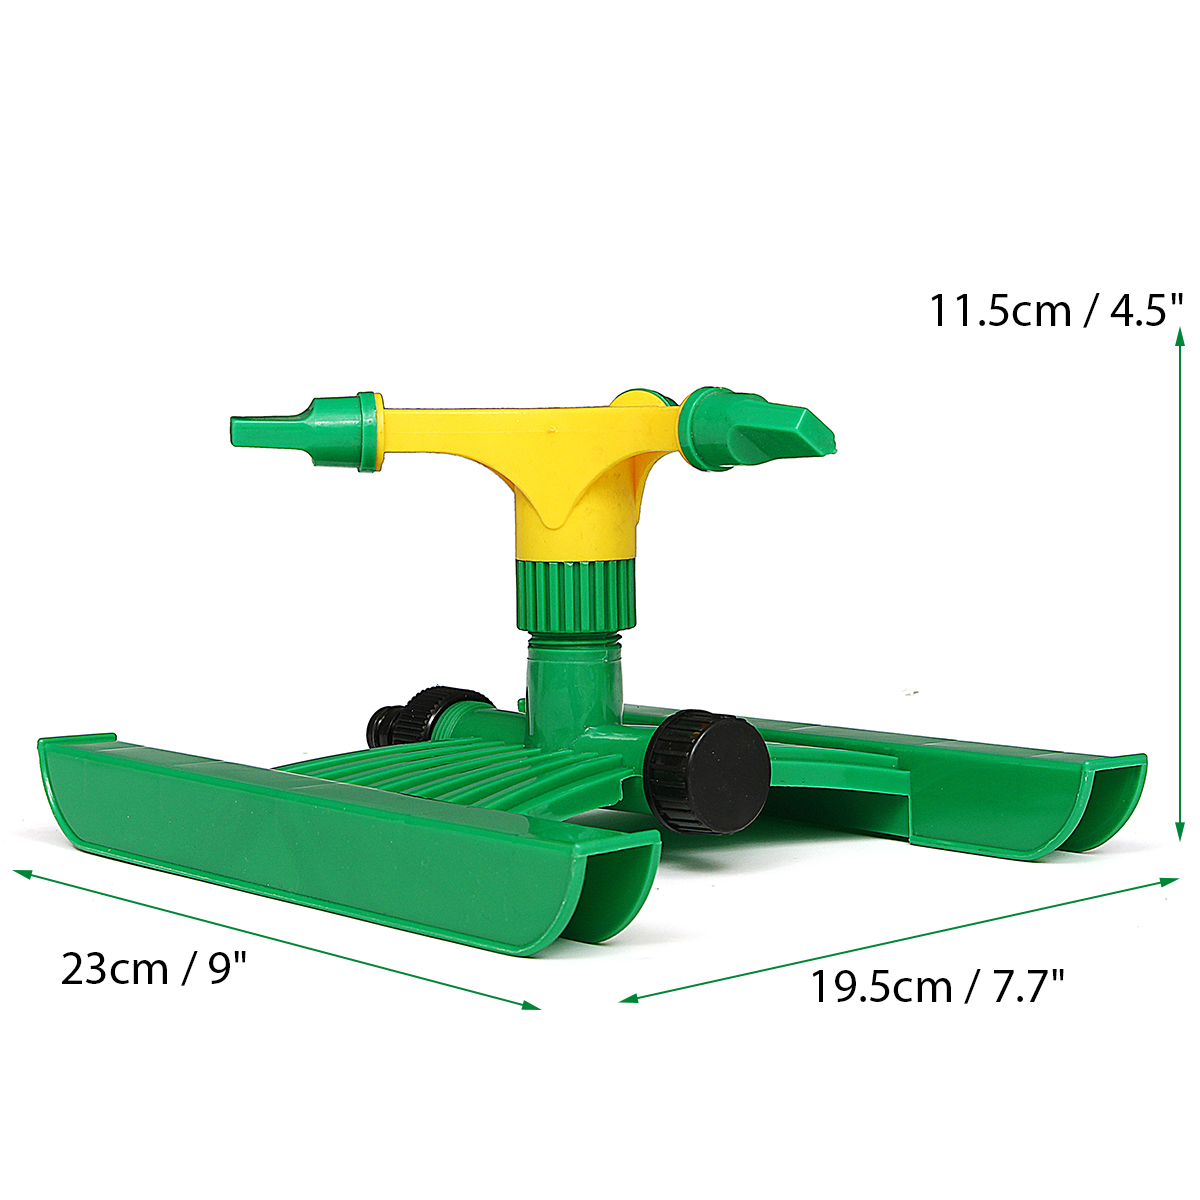 Rotating-Impulse-Sprinkler-Garden-Lawn-Grass-Watering-System-Water-Hose-Sprayer-1478934-10